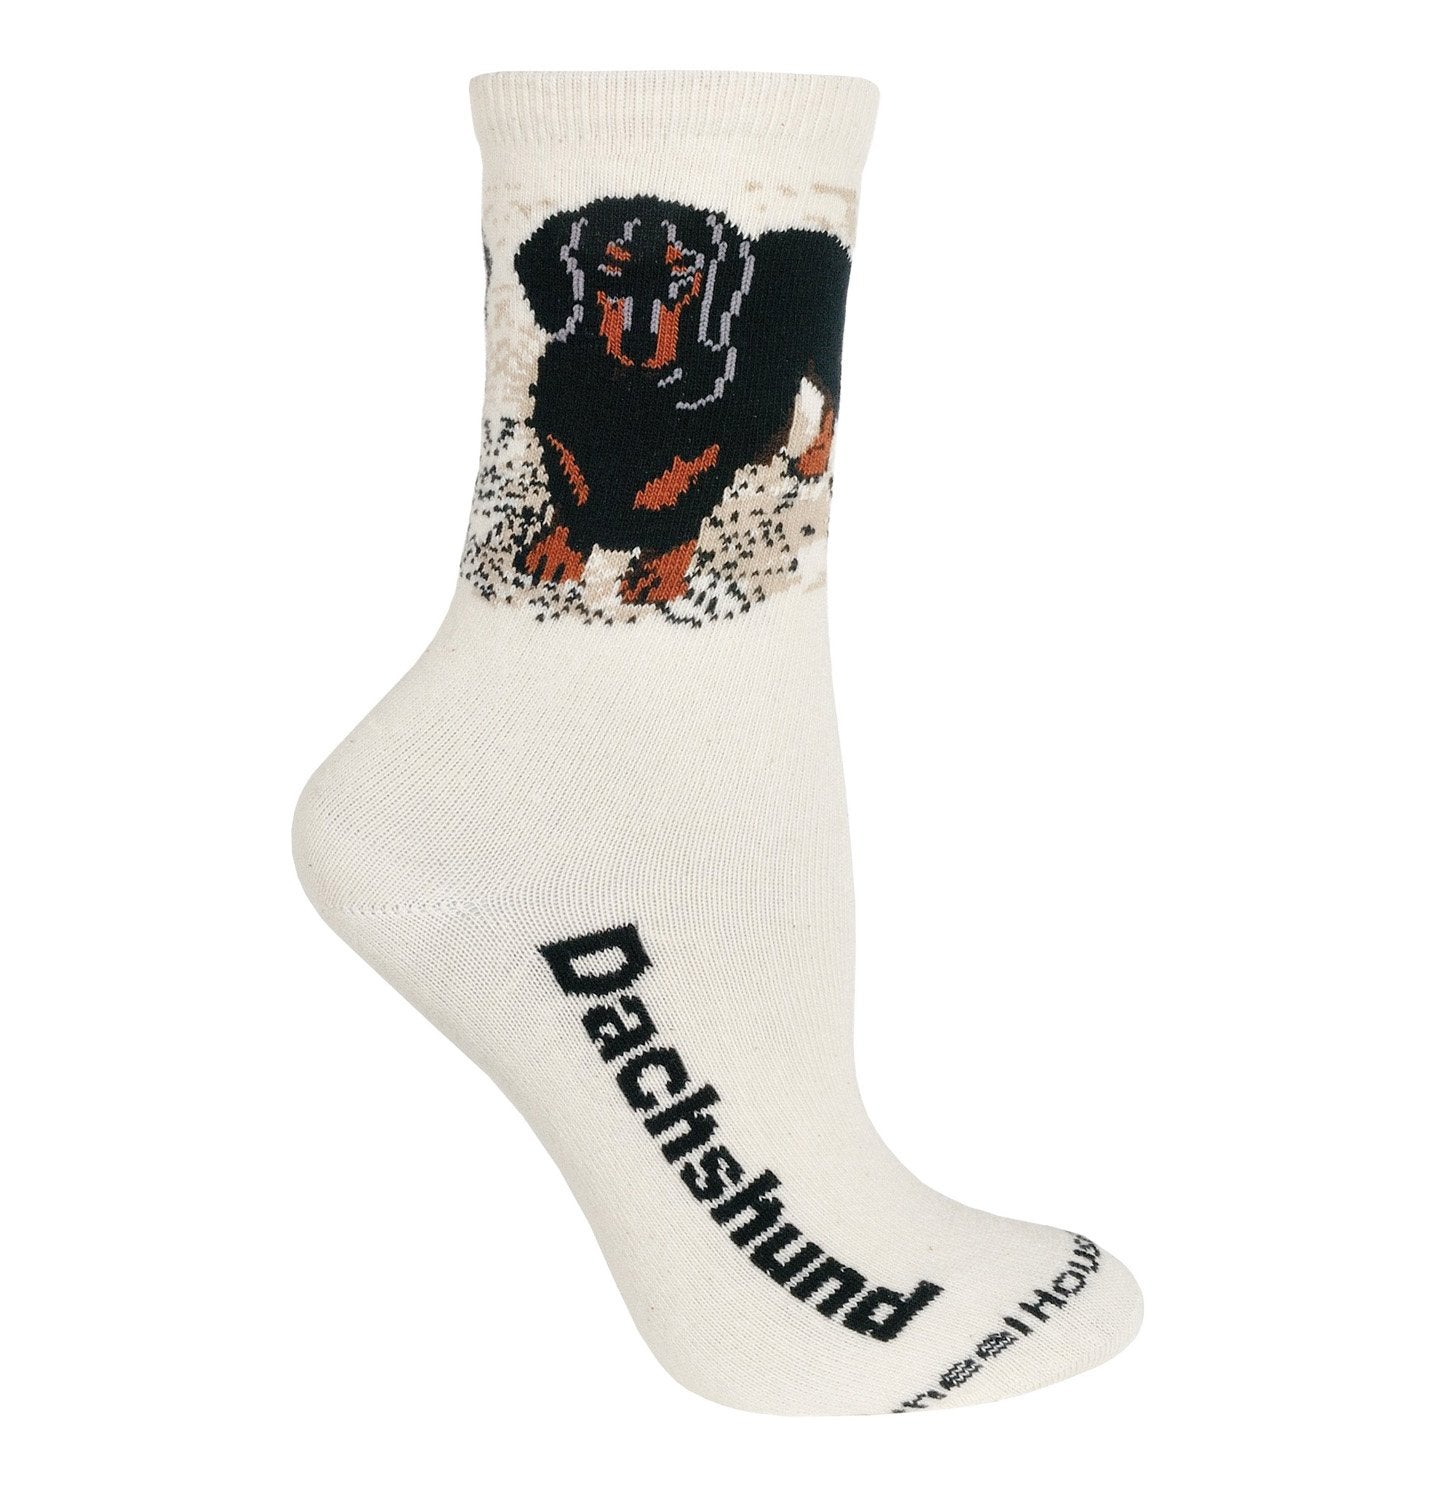 Animal Pride - Black Dachshund on Natural - Adult Cotton Crew Socks